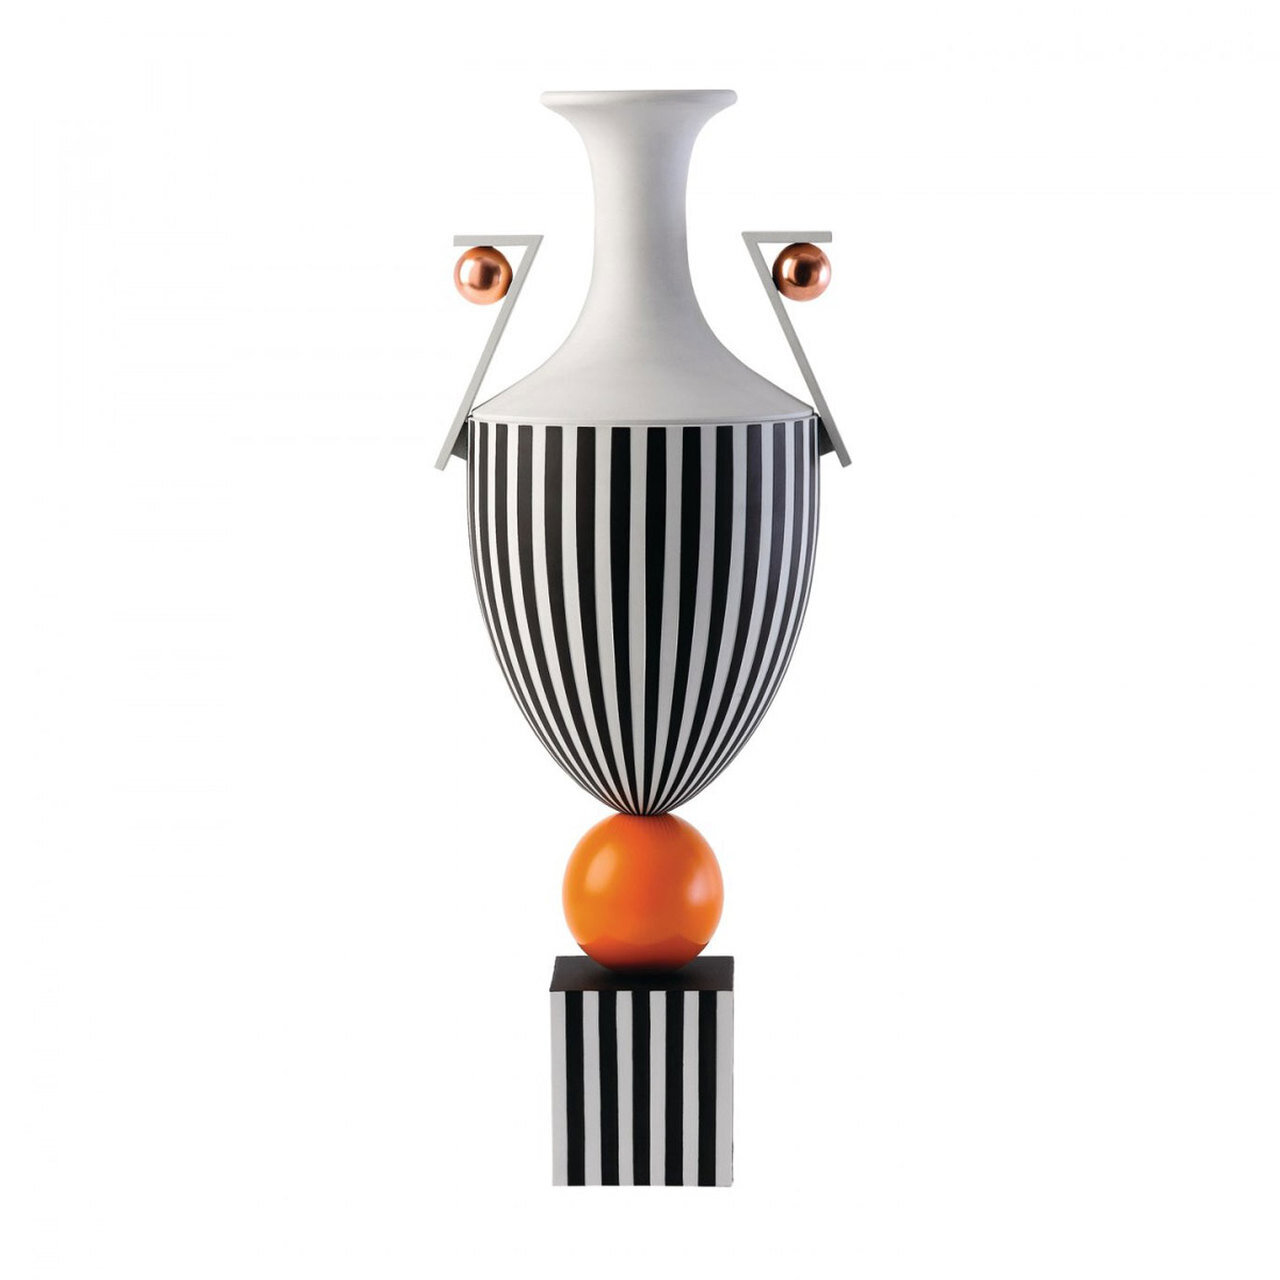 Wedgwood Wedgwood By Lee Broom Wedgwood By Lee Broom Tall Vase On Orange Sphere 19.7 Inch Ltd 15